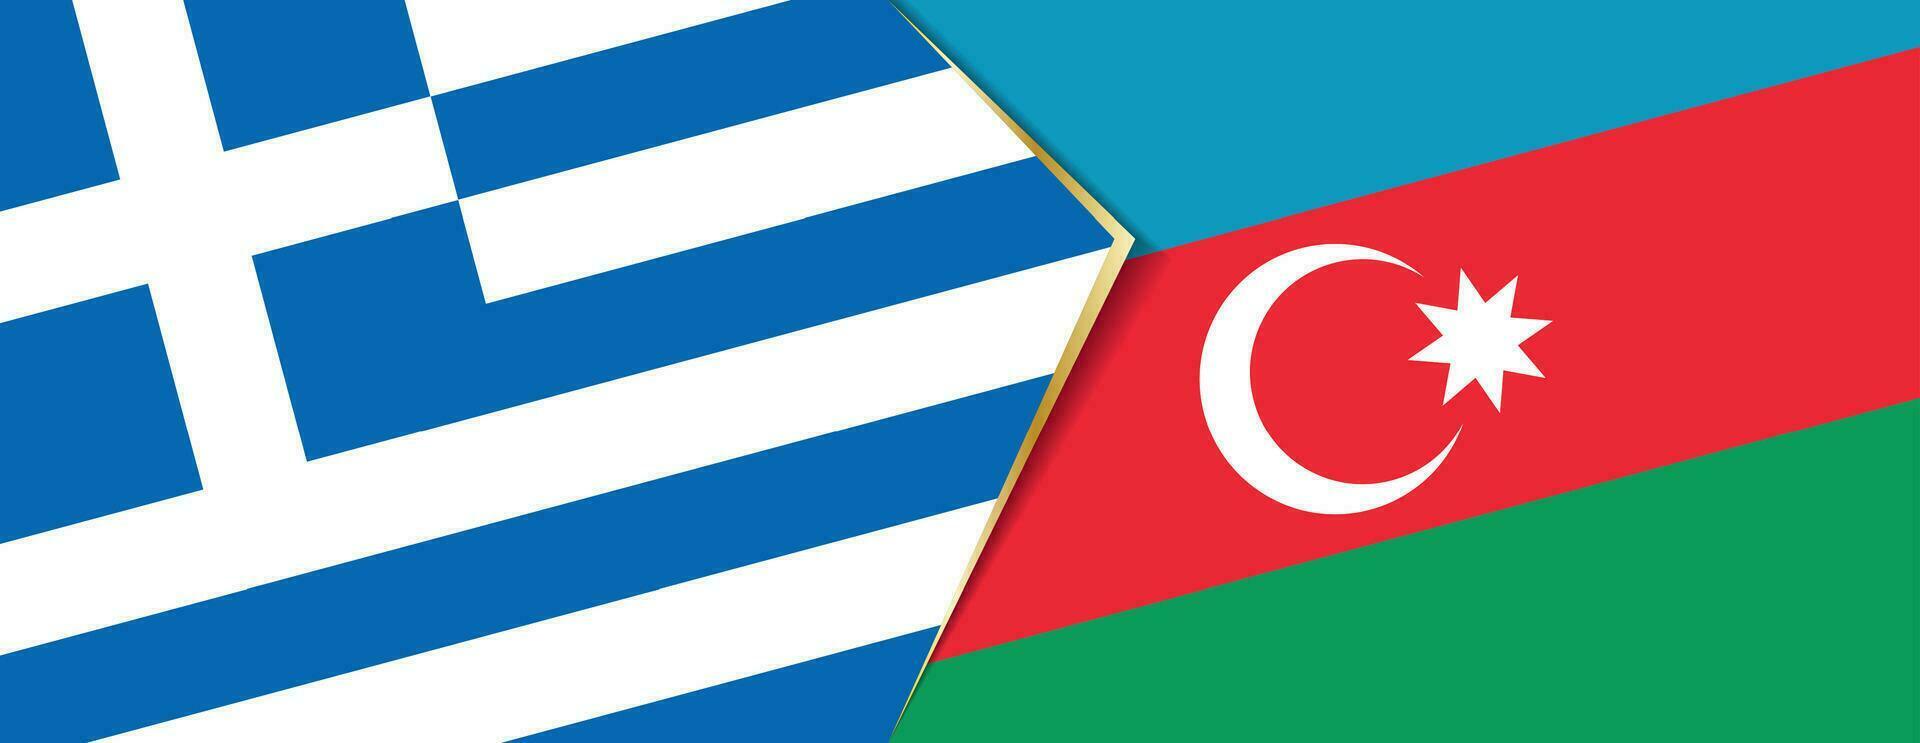 Greece and Azerbaijan flags, two vector flags.